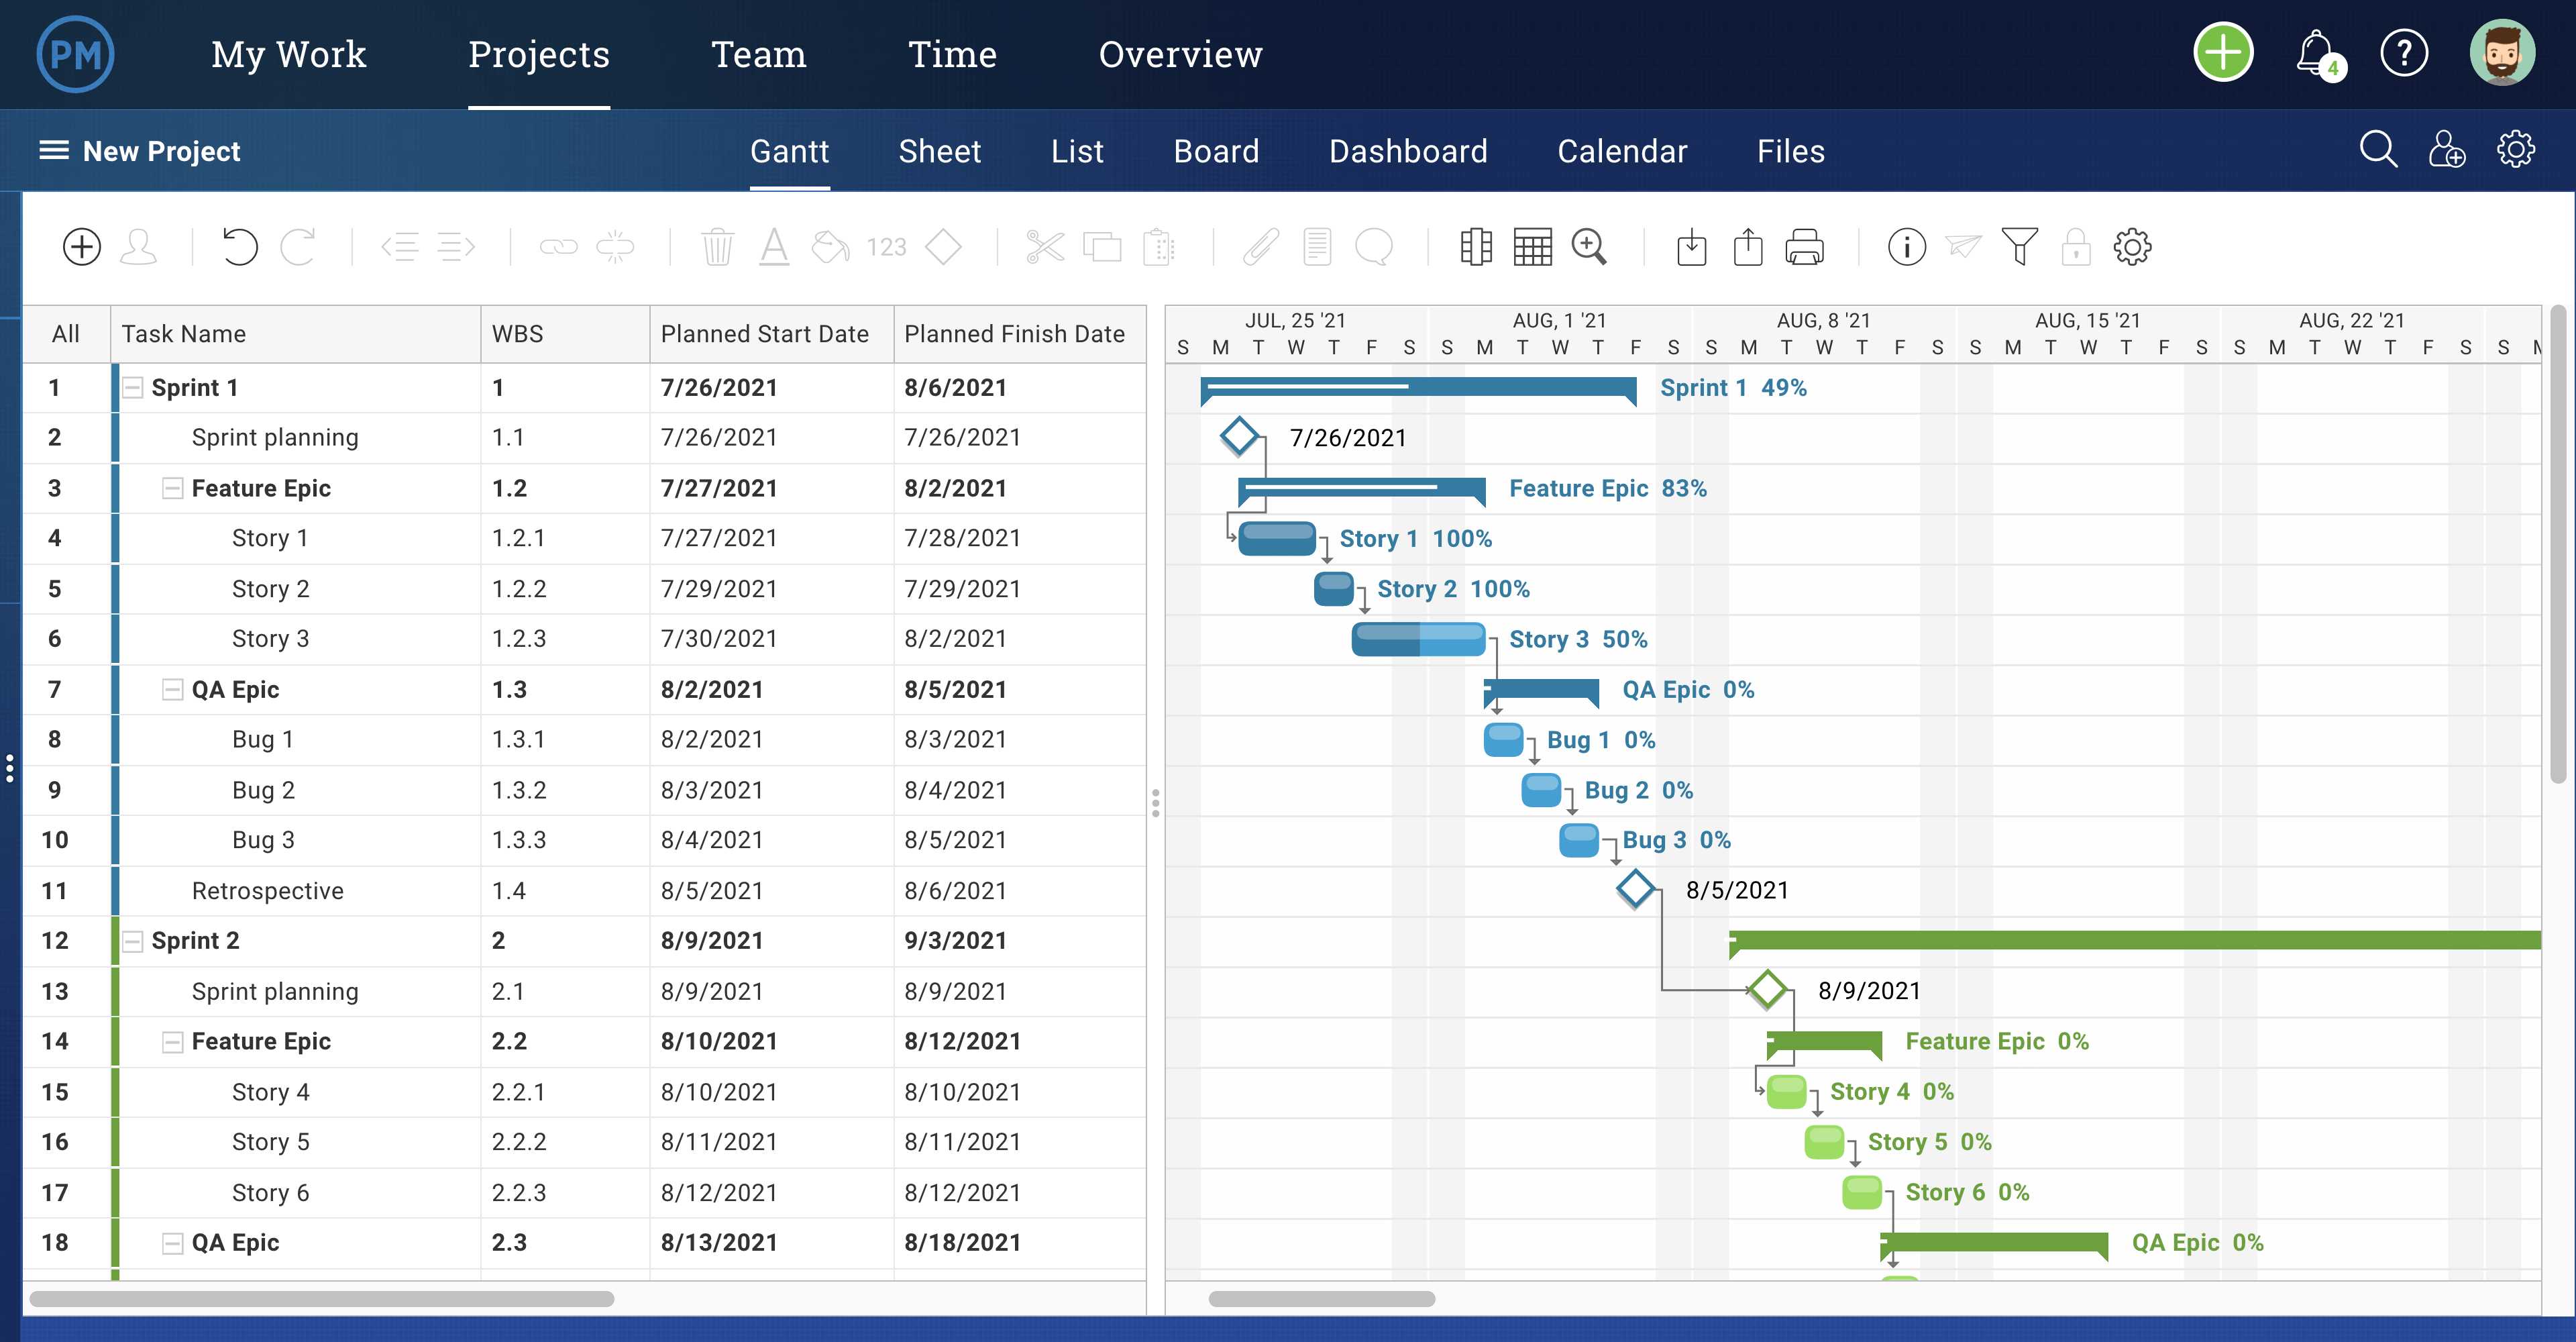 ProjectManager's online Gantt chart, ideal for time management